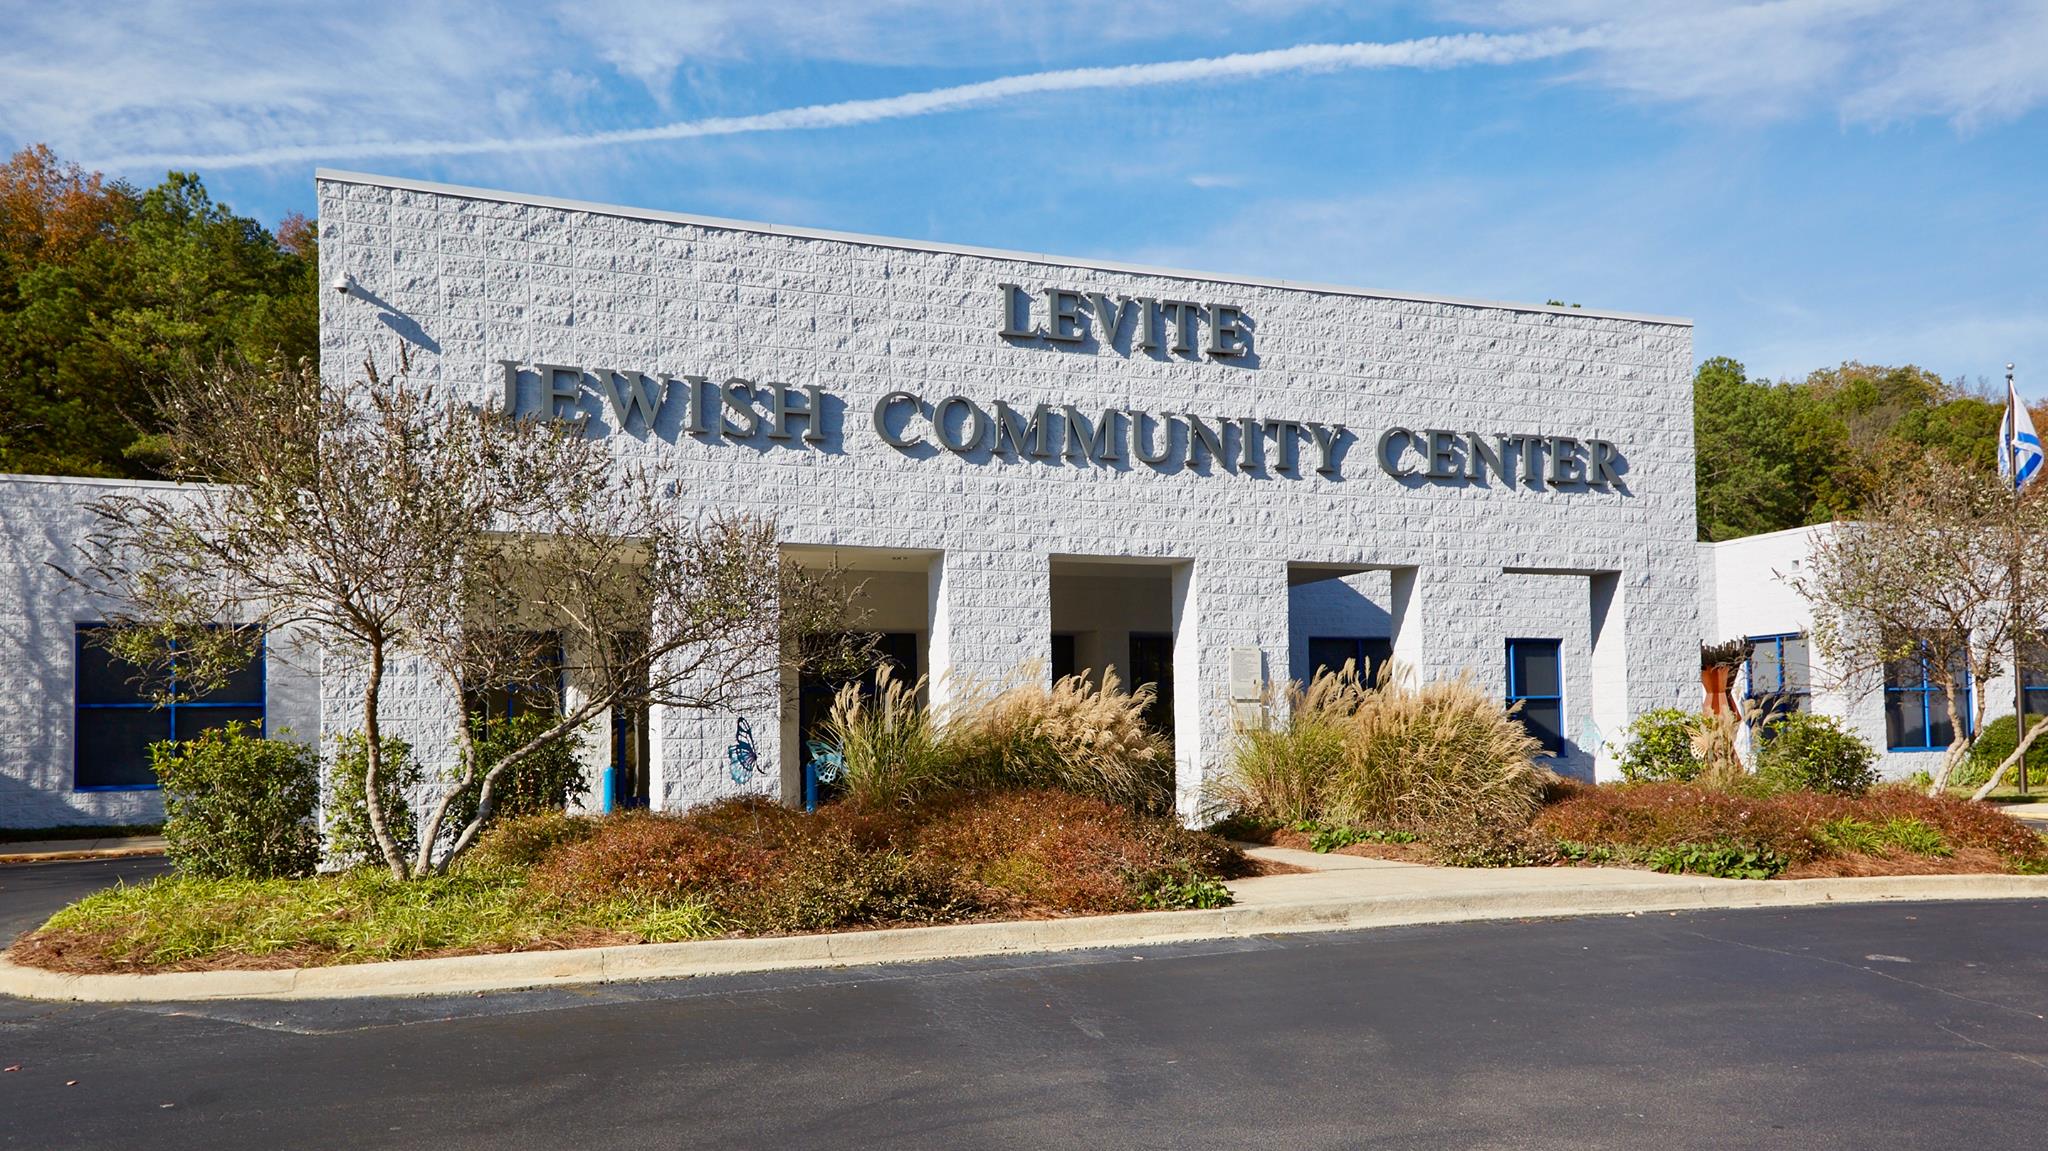 Levite Jewish Community Center - Mobile Pantry